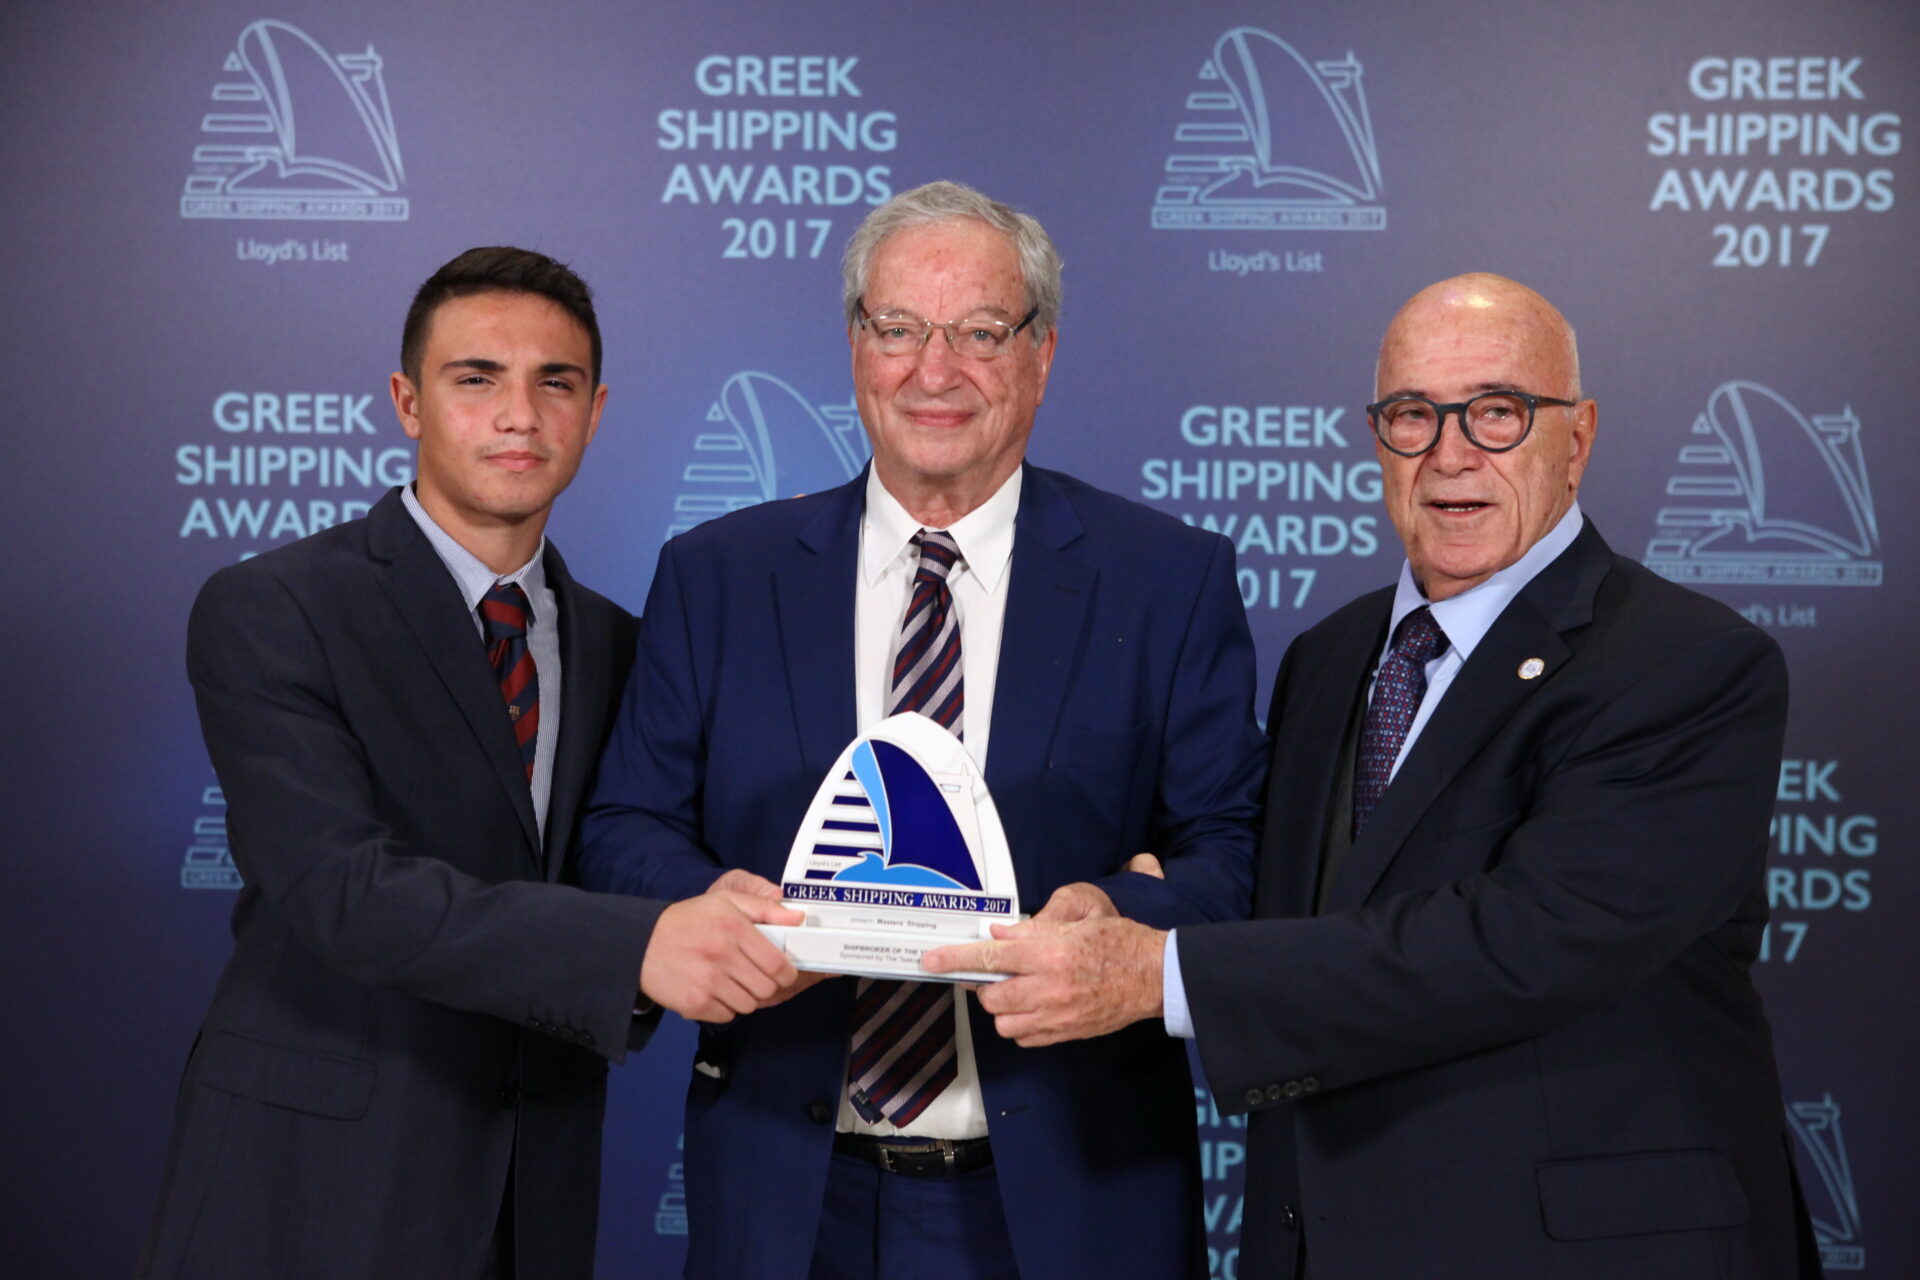 Dennis Vernardakis of Masters’ Shipping (centre) accepting the Shipbroker of the Year Award from Capt. Panagiotis Tsakos and Panagiotis Tsakos Junior of sponsor The Tsakos Group.